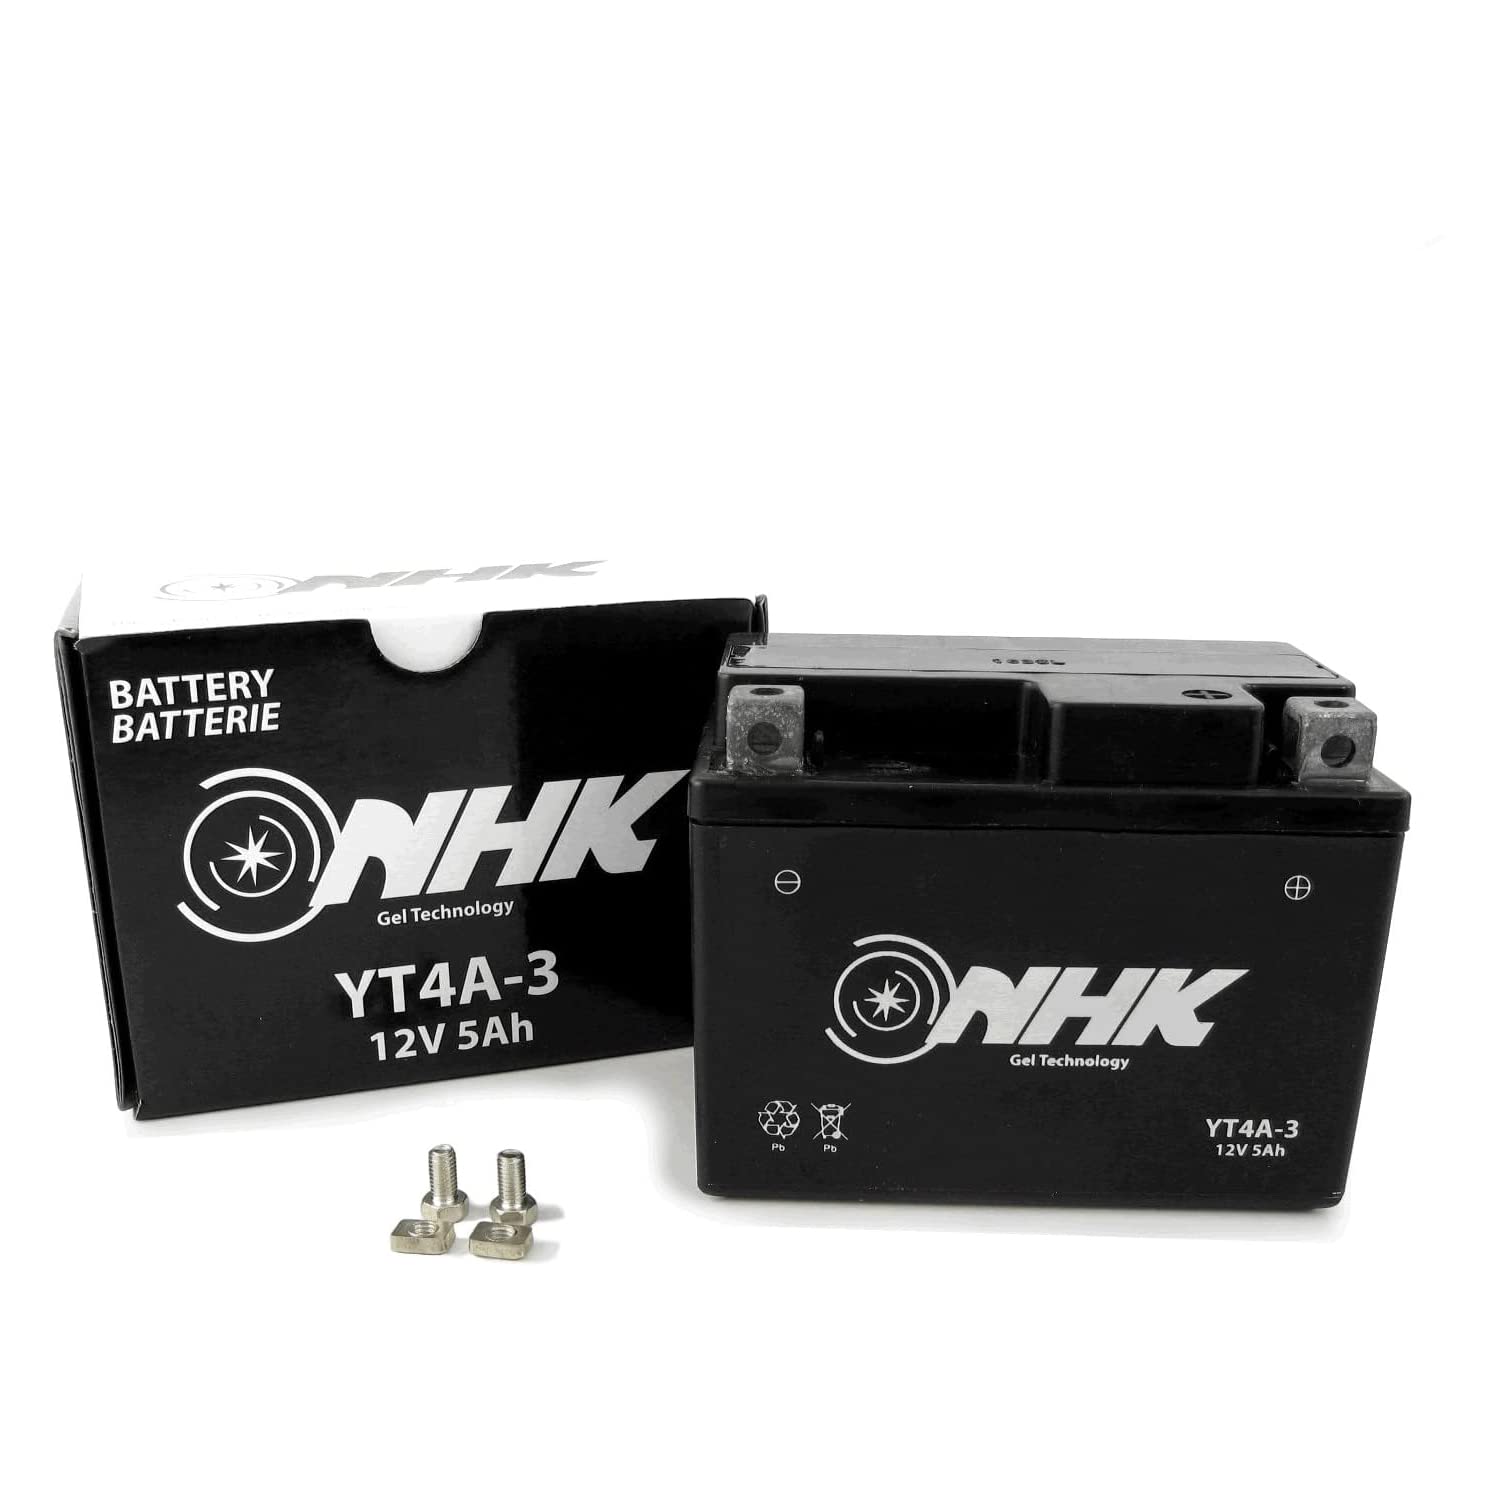 Wartungsfreie Gel Batterie 5Ah kompatibel mit Yamaha Neos 50 2T 97-01 5AD, Neos Easy 50 2T 13- SA457, Why 50 02-03 SA03B, Why 50 04-13 SA03E (YT4A-3) von Area Longboard